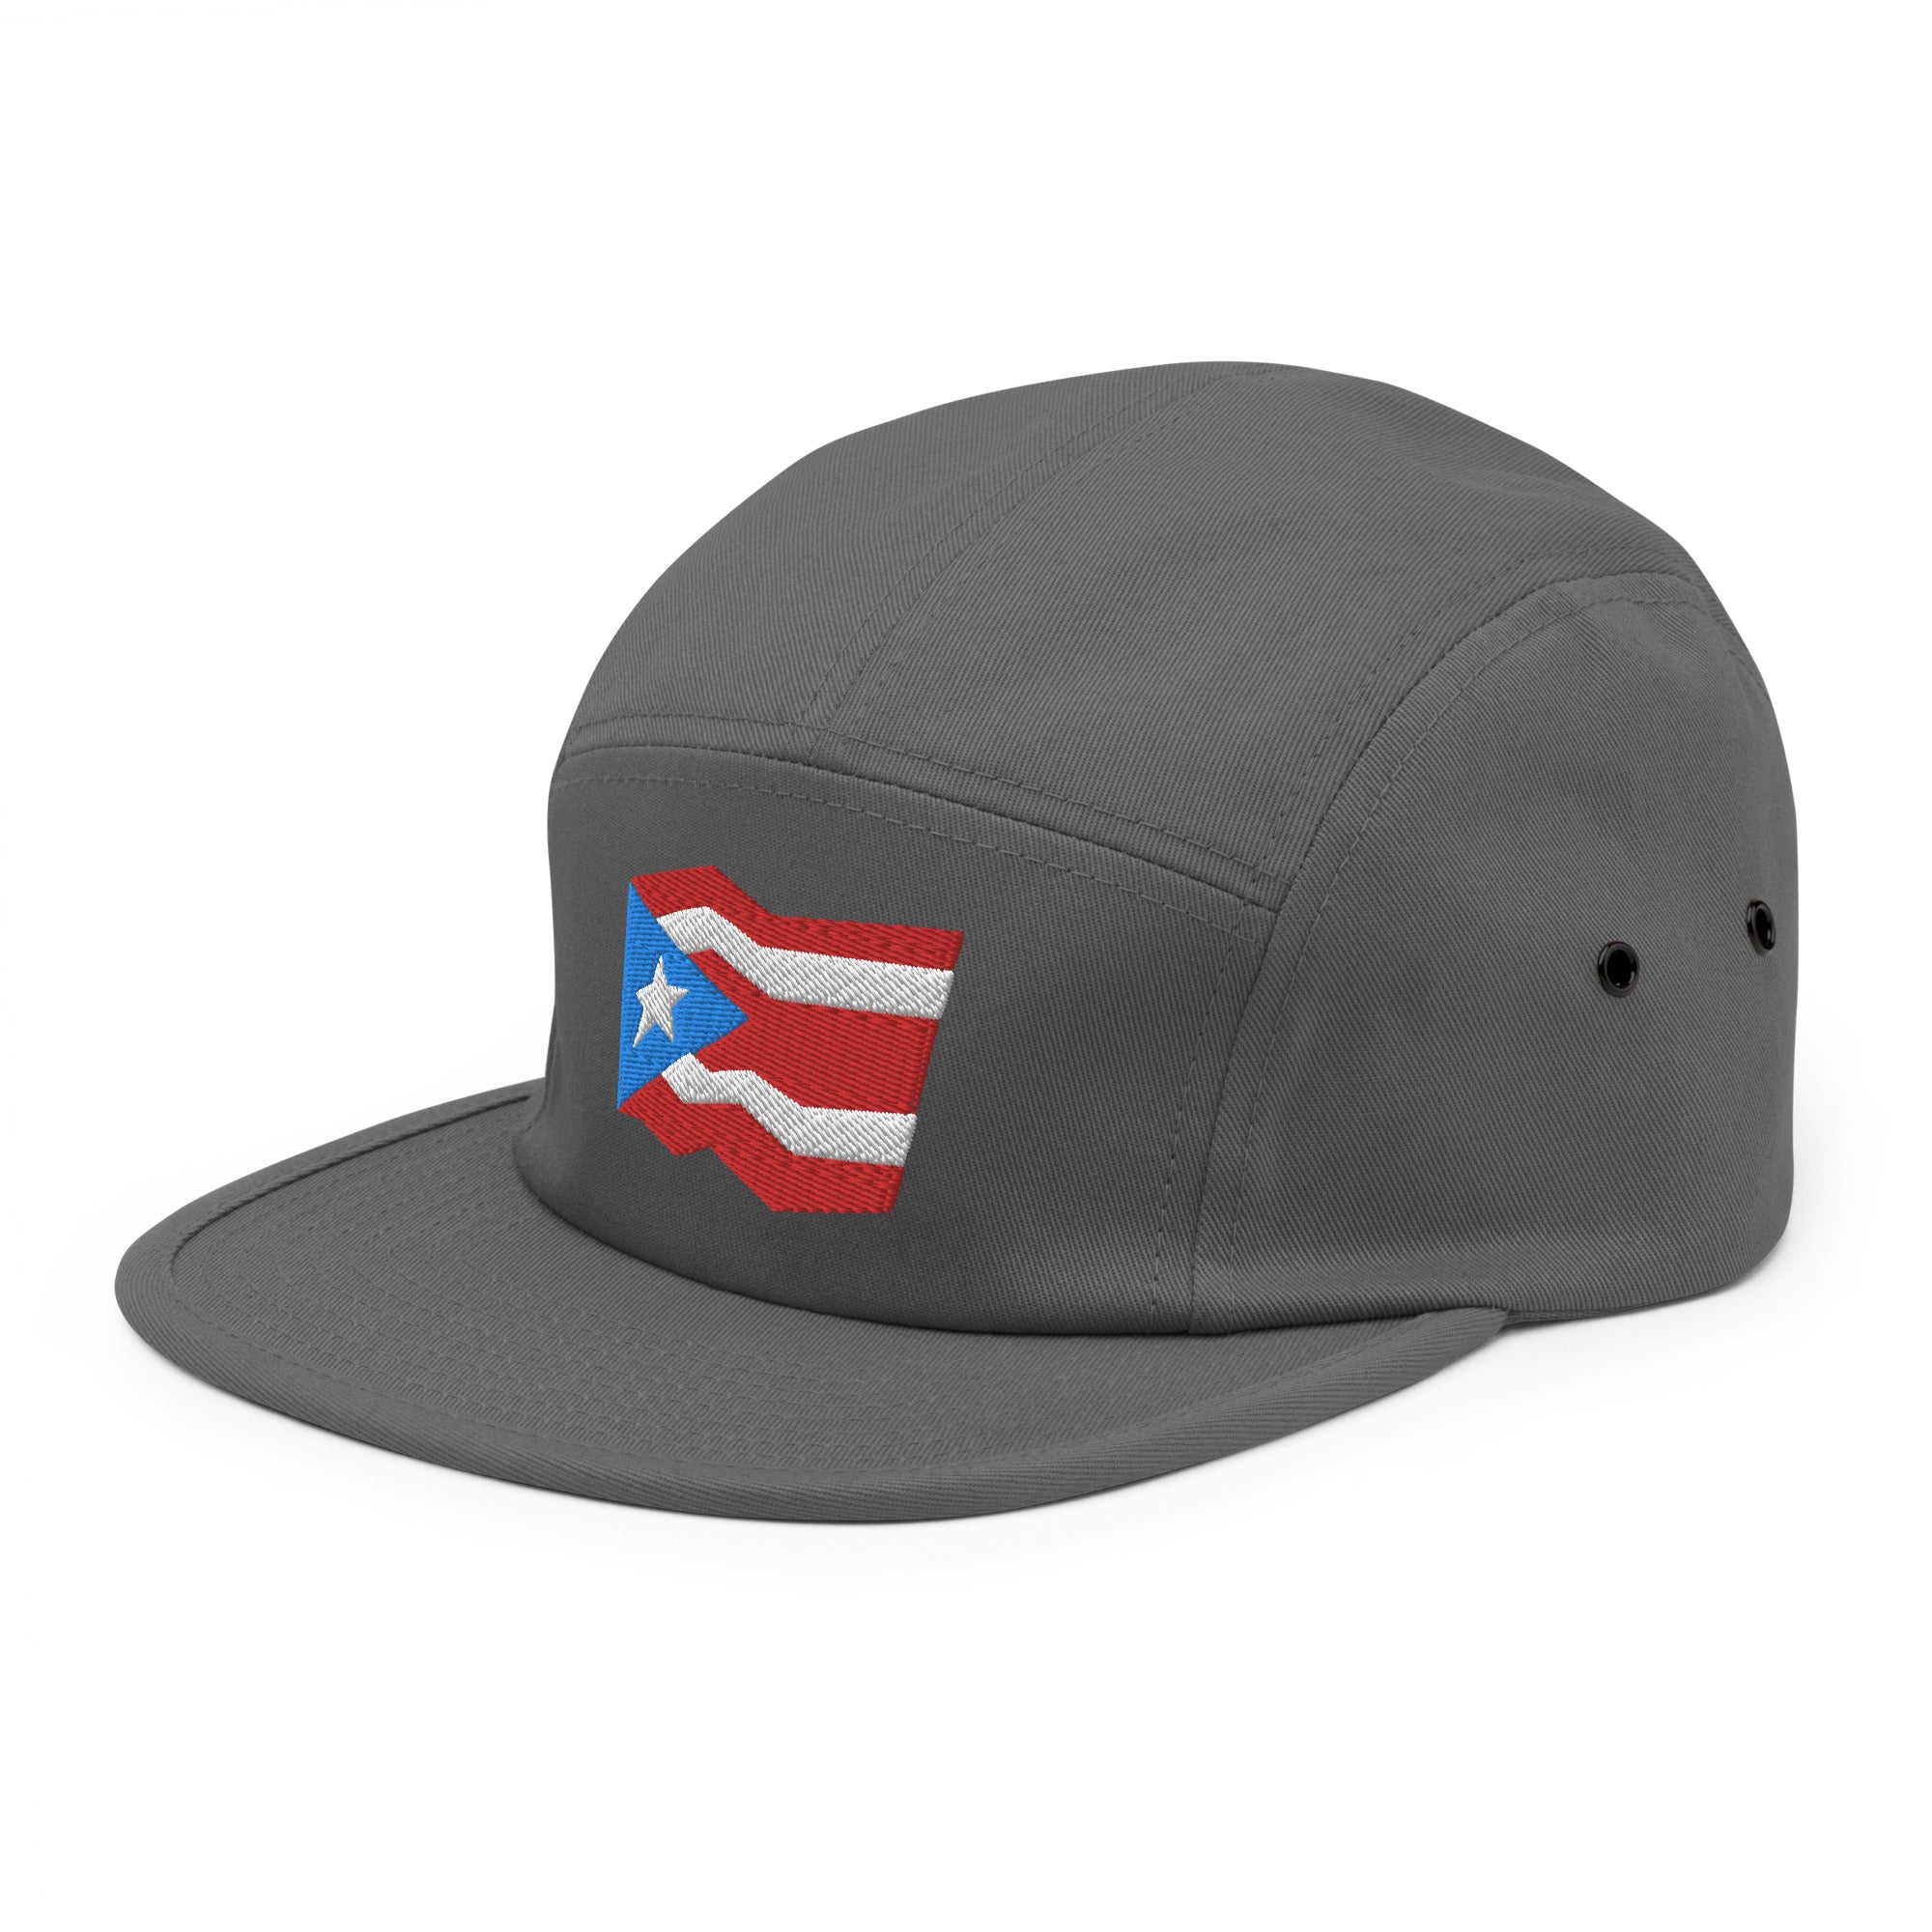 Puerto Rico Hat